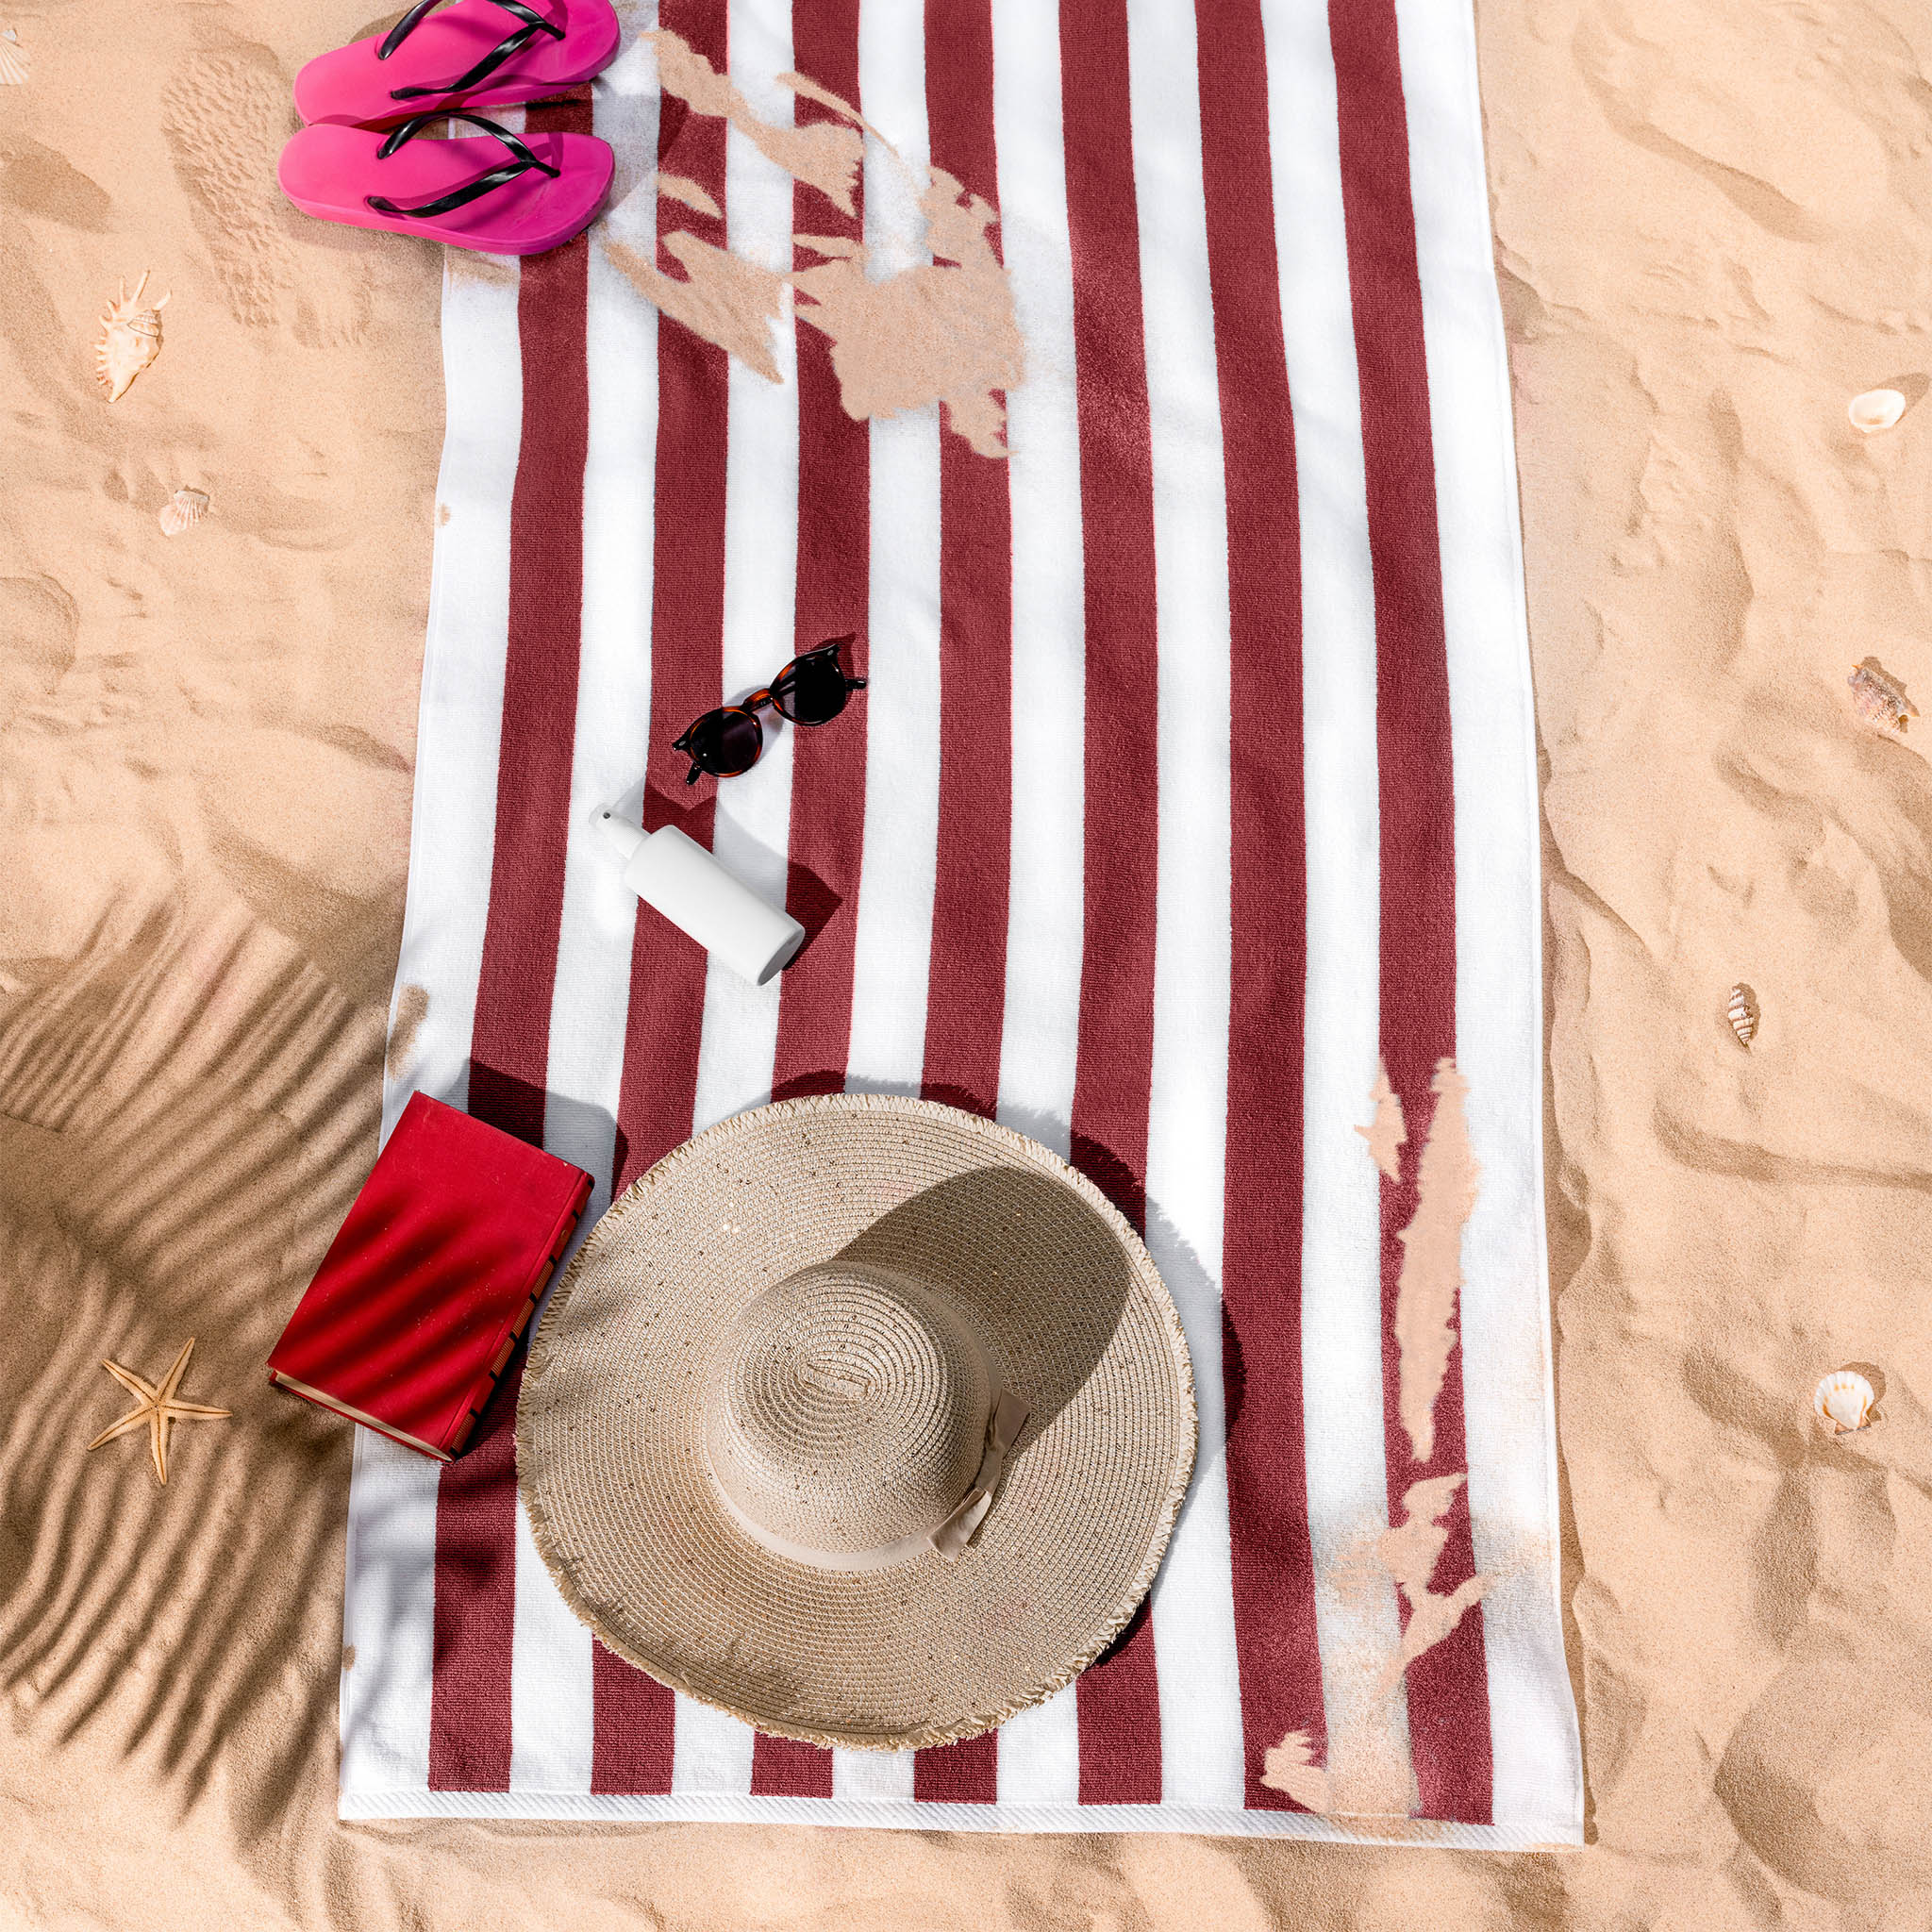 American Soft Linen 100% Cotton 4 Pack Beach Towels Cabana Striped Pool Towels -Bordeaux-6